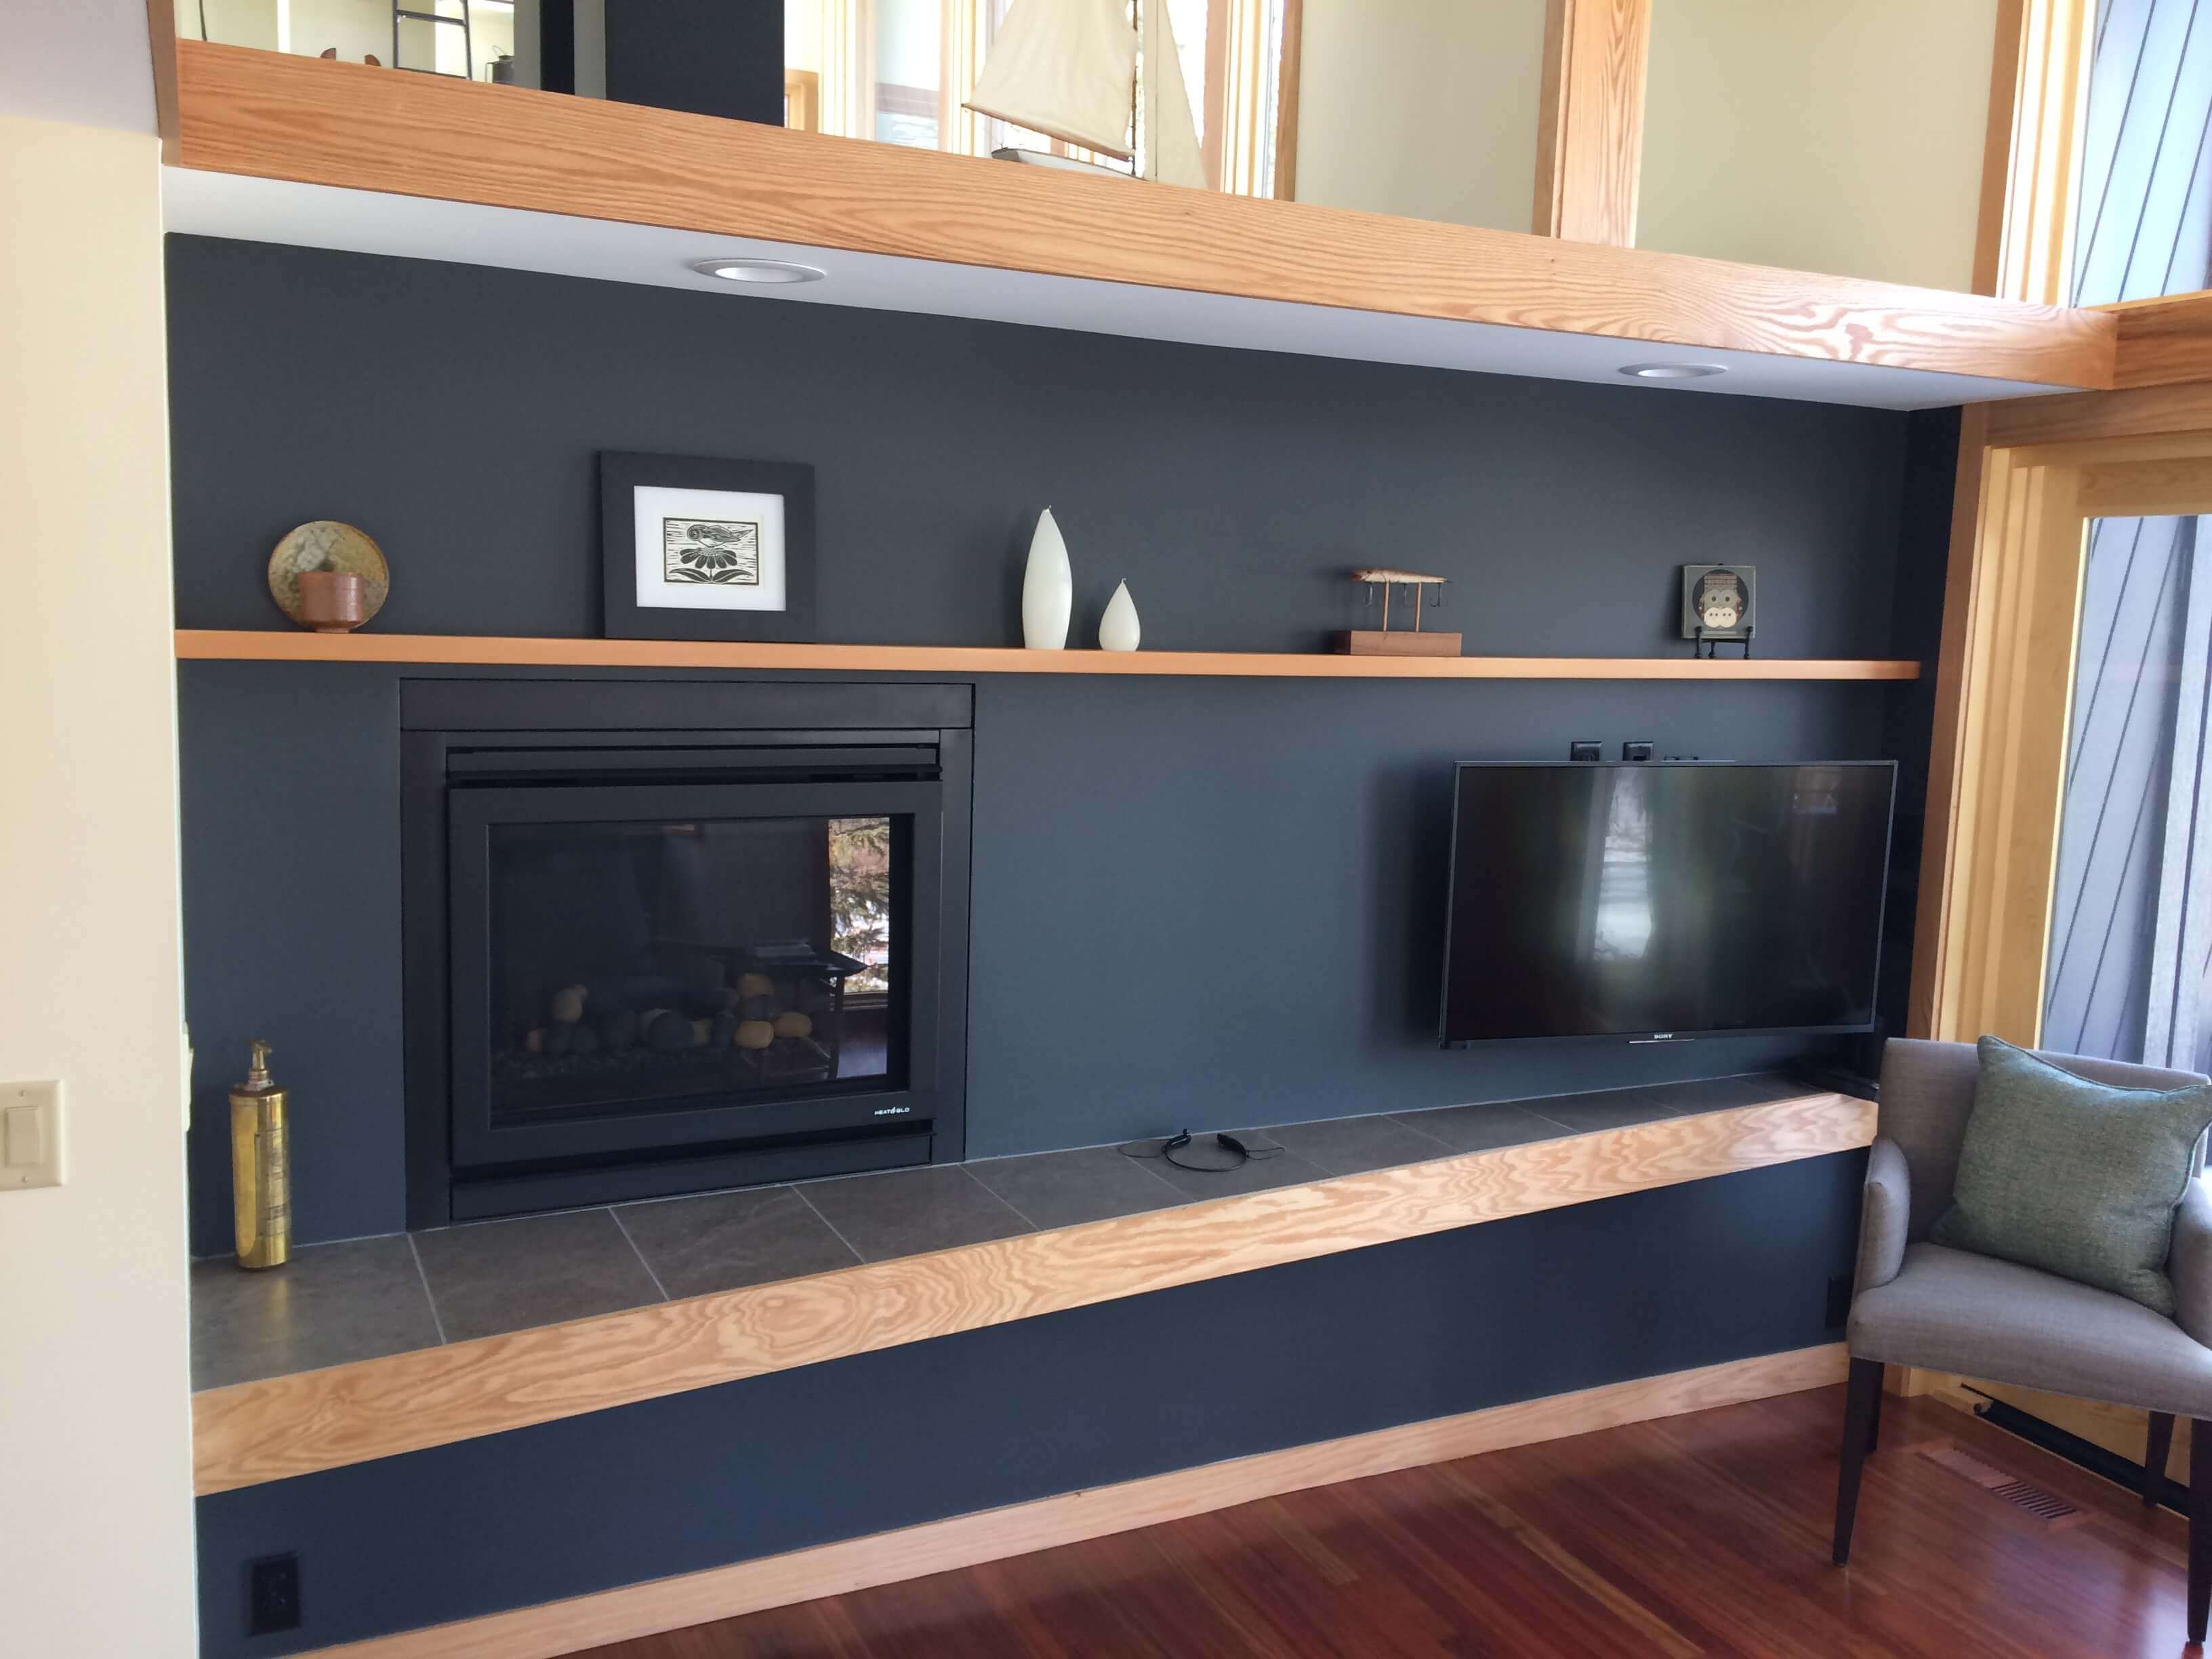 https://valleycustomcabinets.com/wp-content/uploads/2018/02/Floating-shelves-Fireplace-area-1.jpg